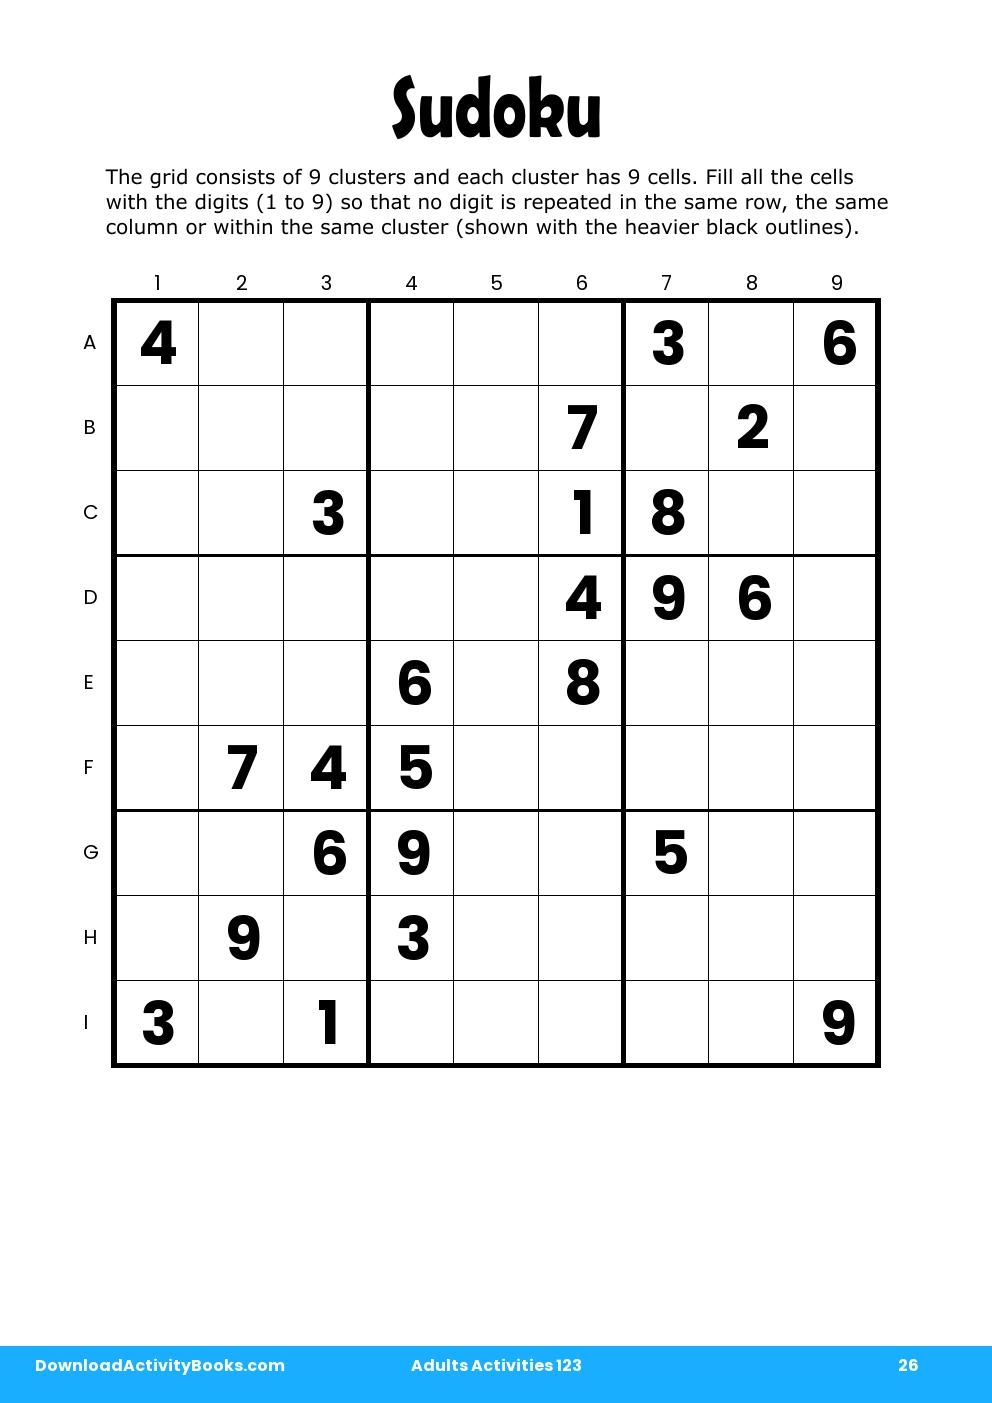 Sudoku in Adults Activities 123